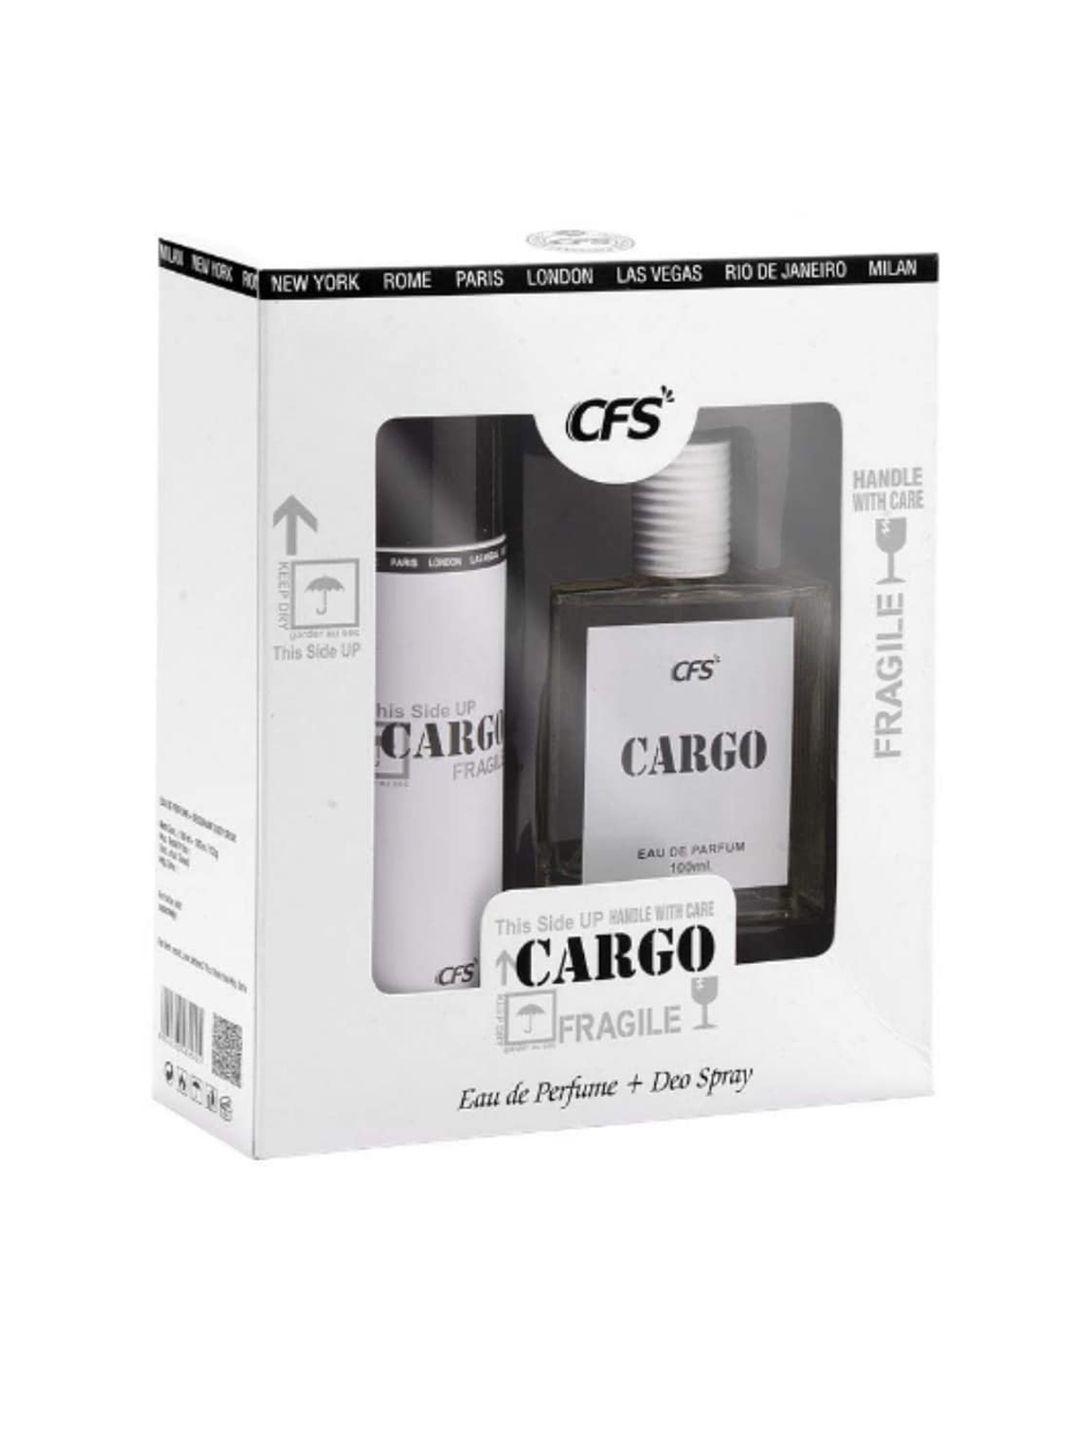 cfs cargo white perfume & deodorant gift set - 300 ml